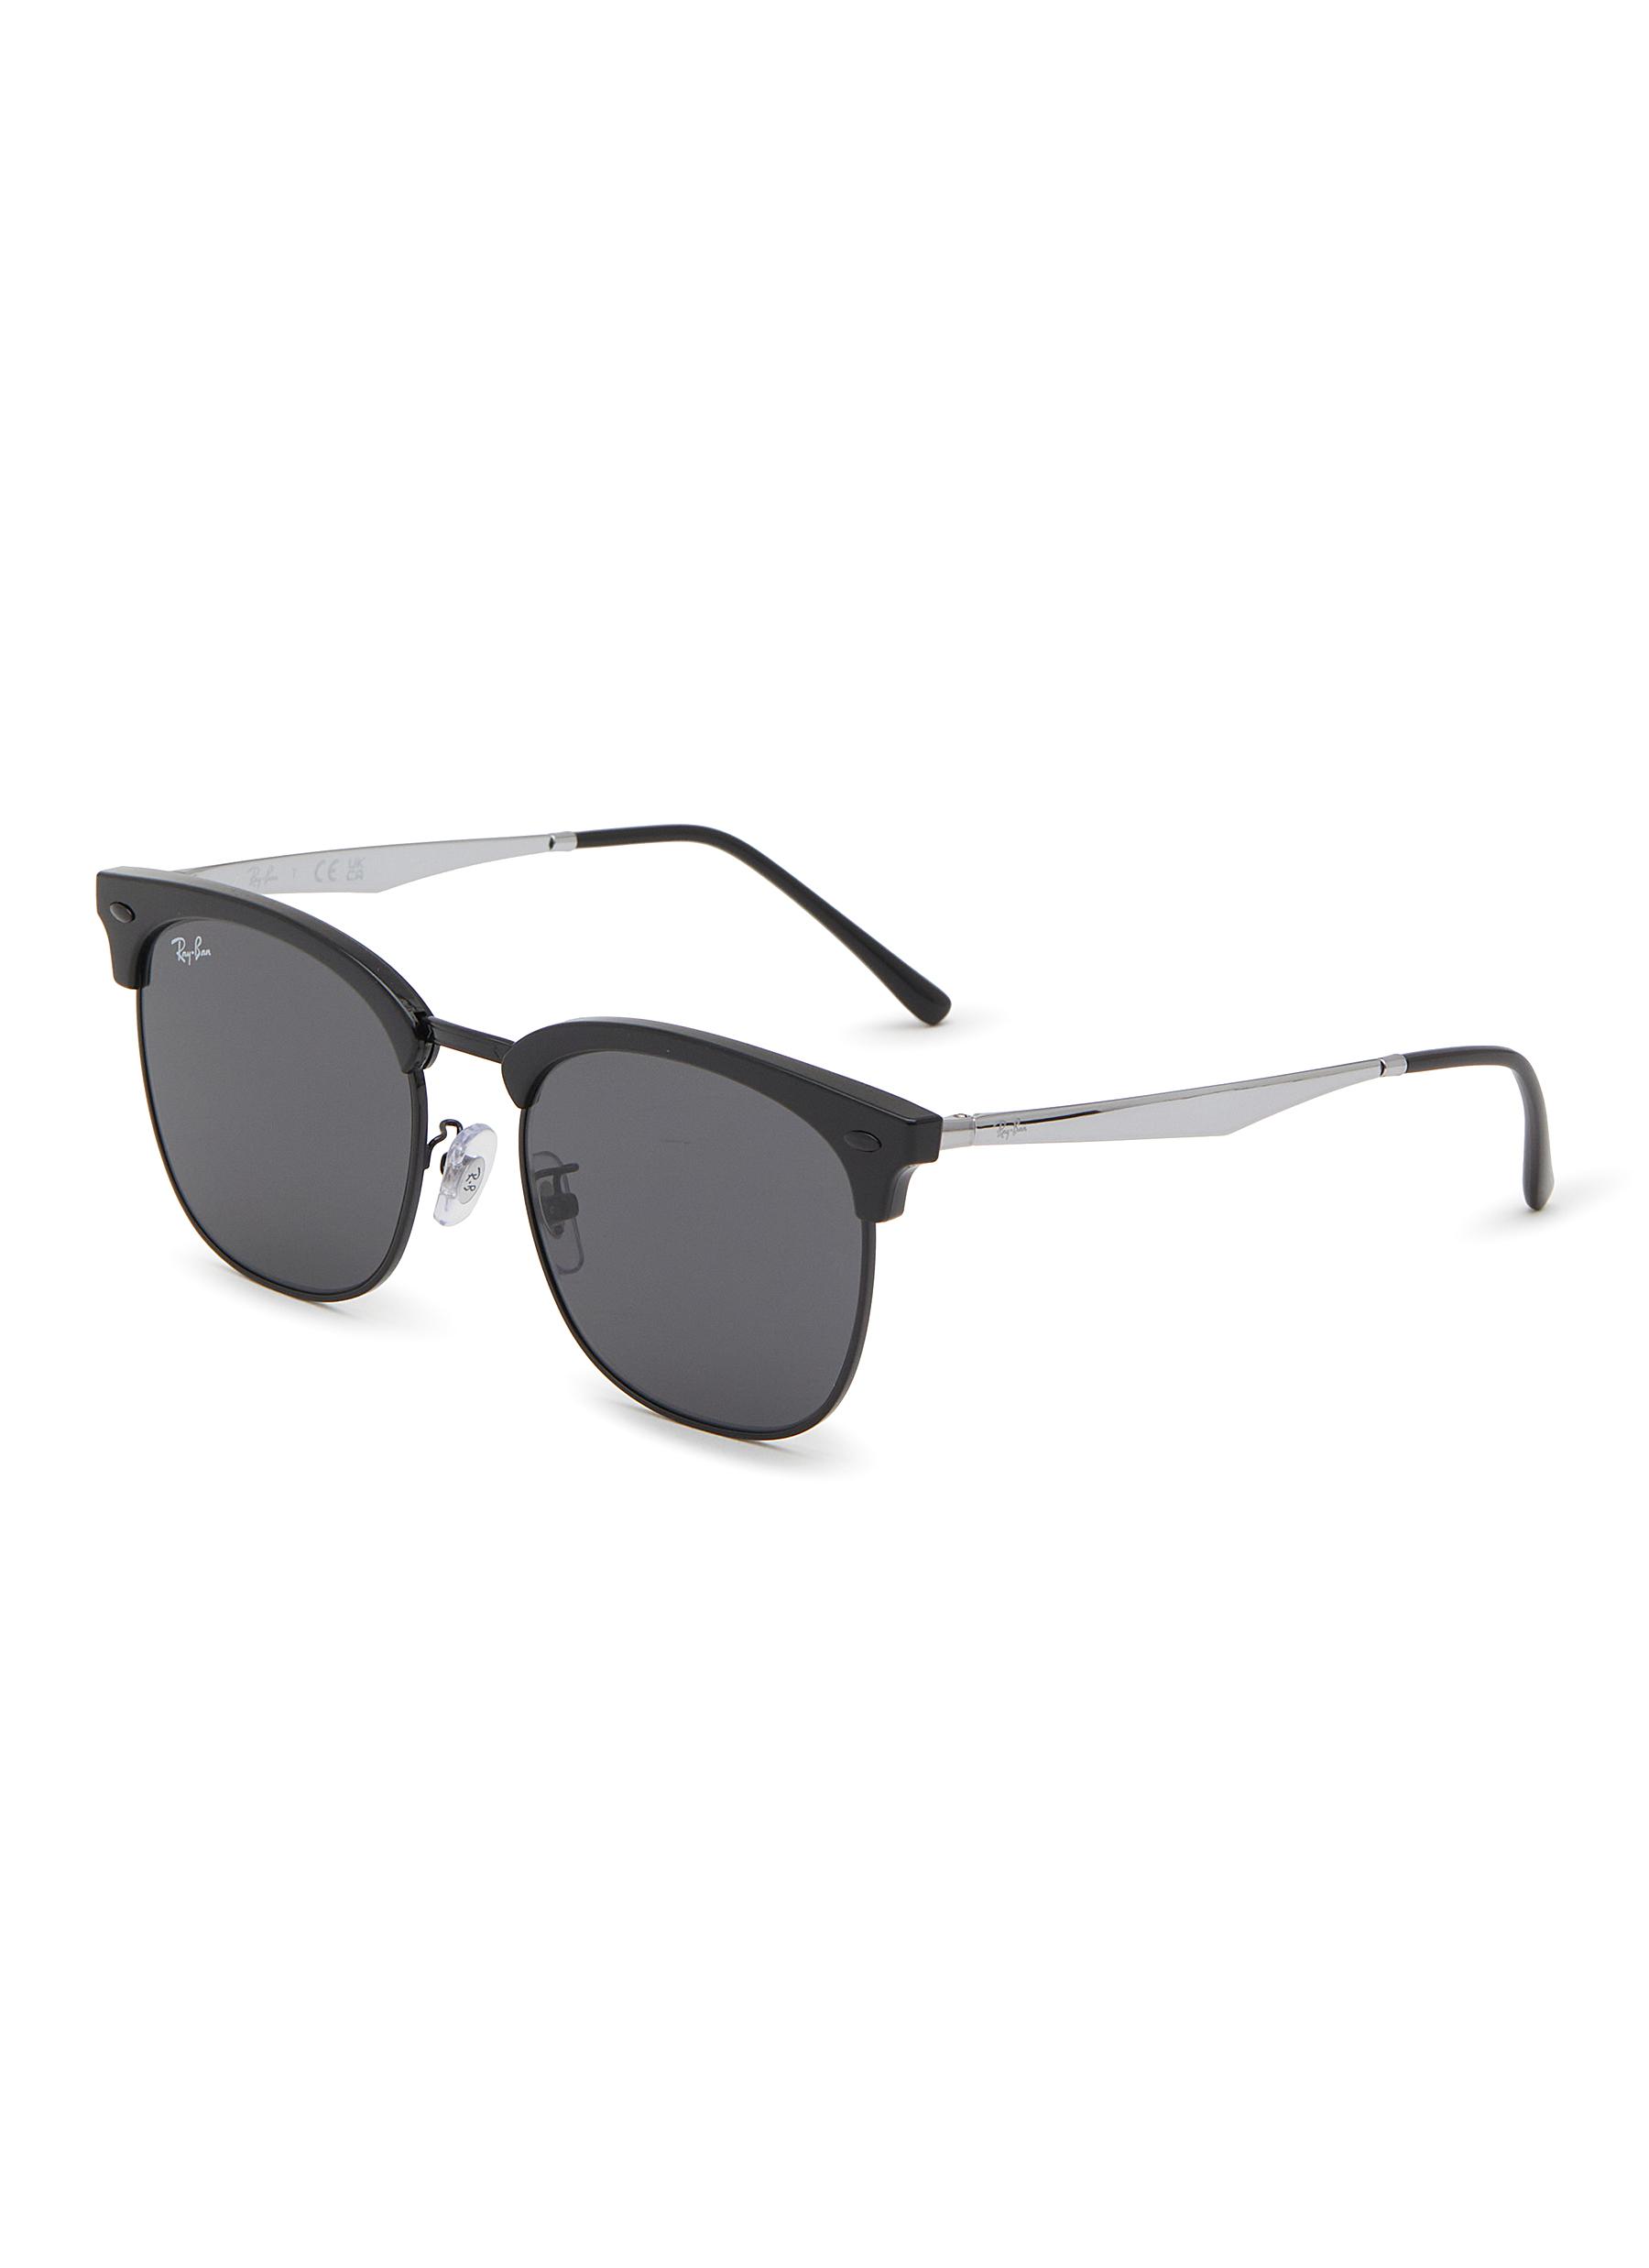 Ray Ban Green Tinted Square Sunglasses S35C5495 @ ₹6898-mncb.edu.vn